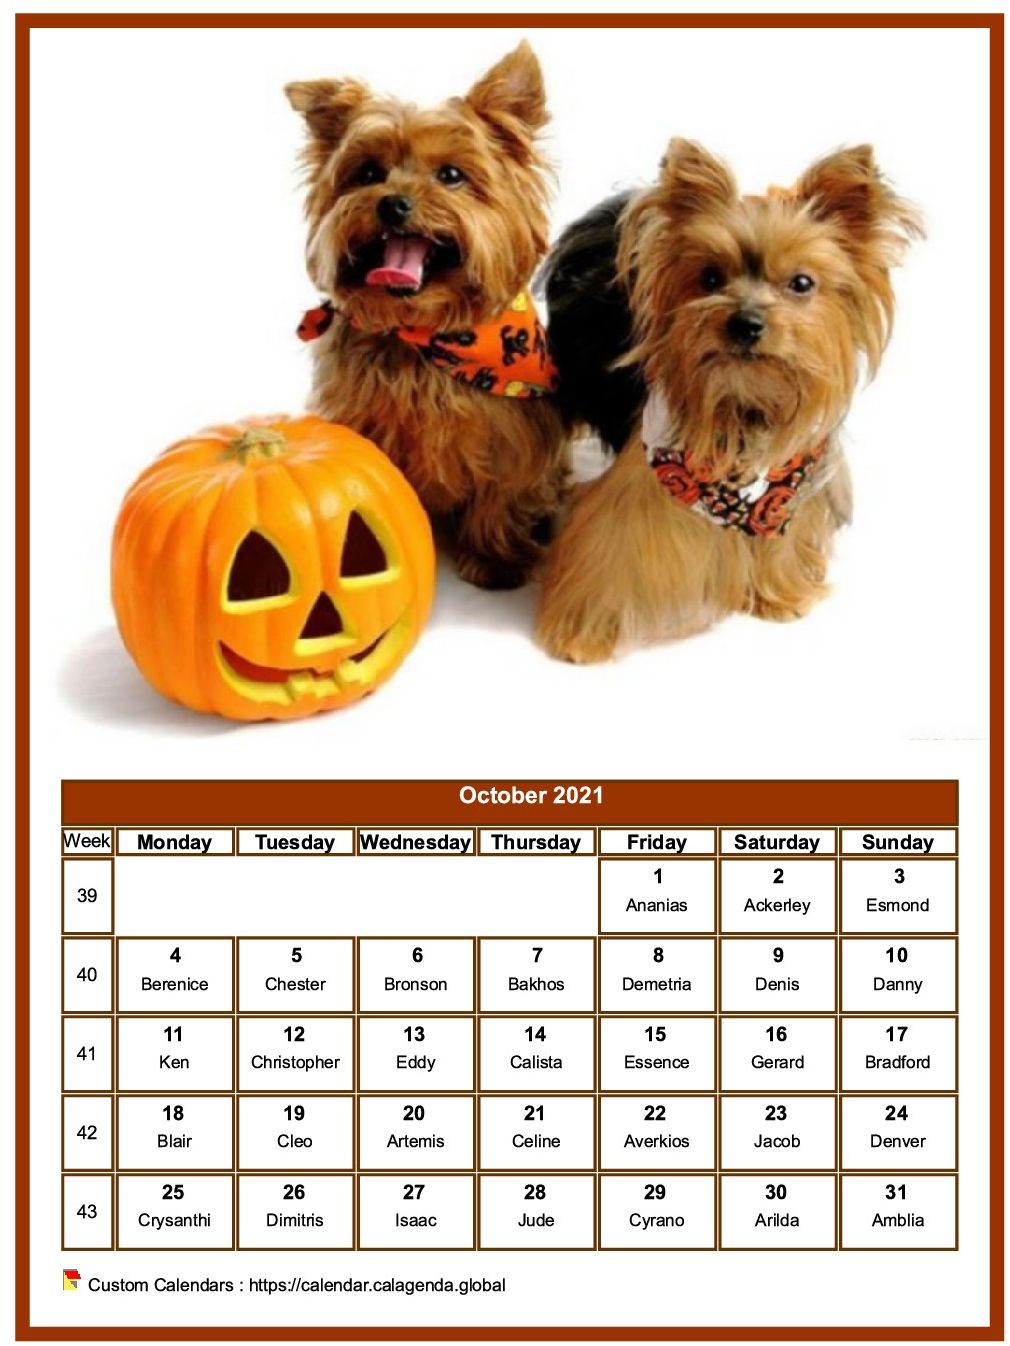 Calendar October 2021 dogs